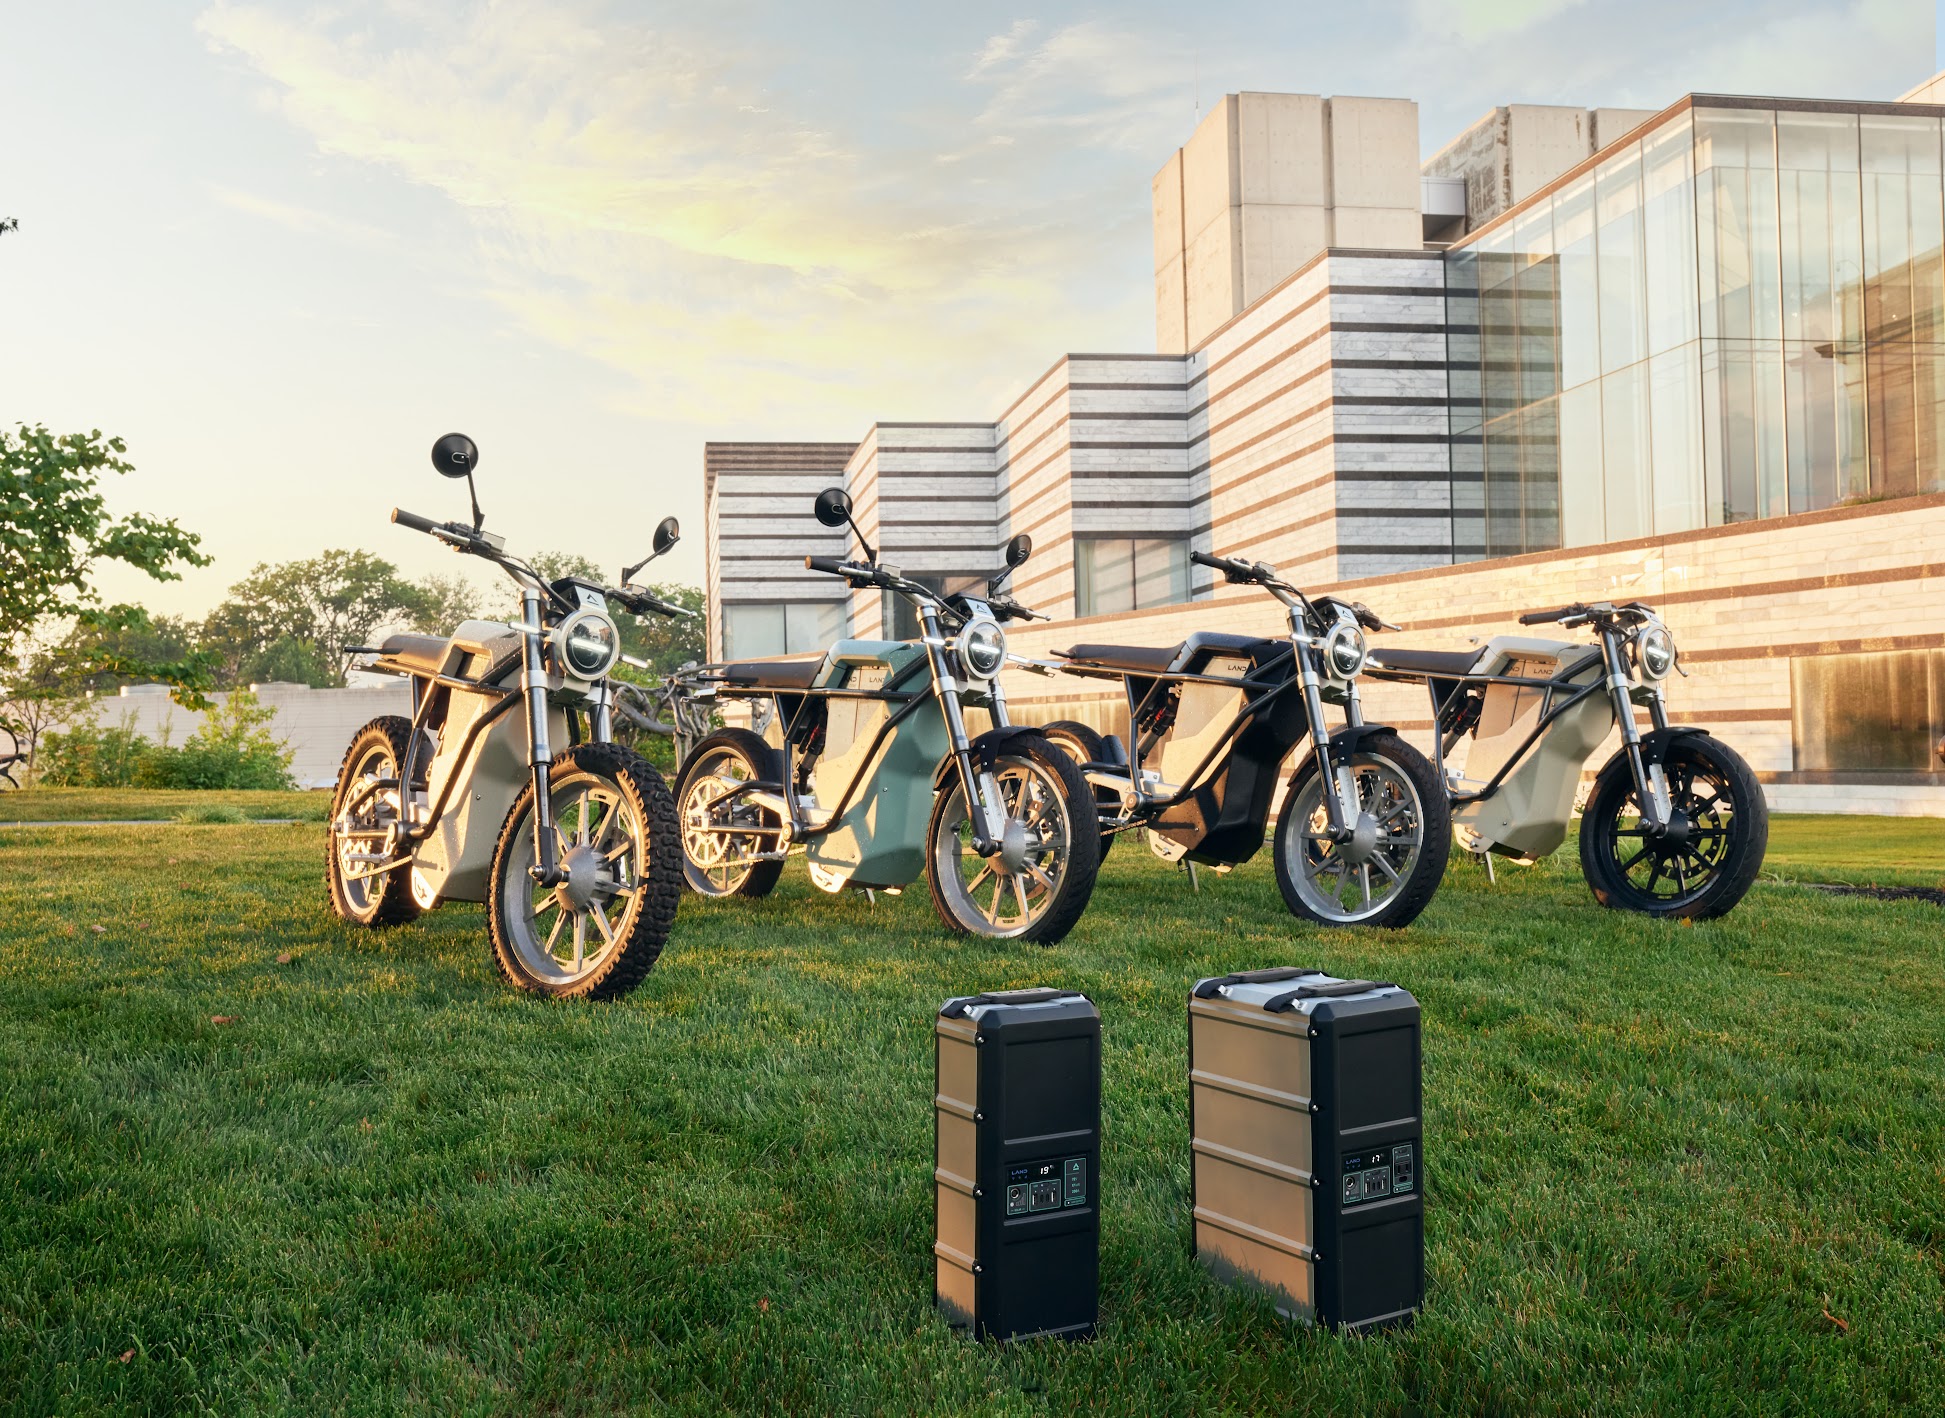 LAND moto e-bikes and battery units